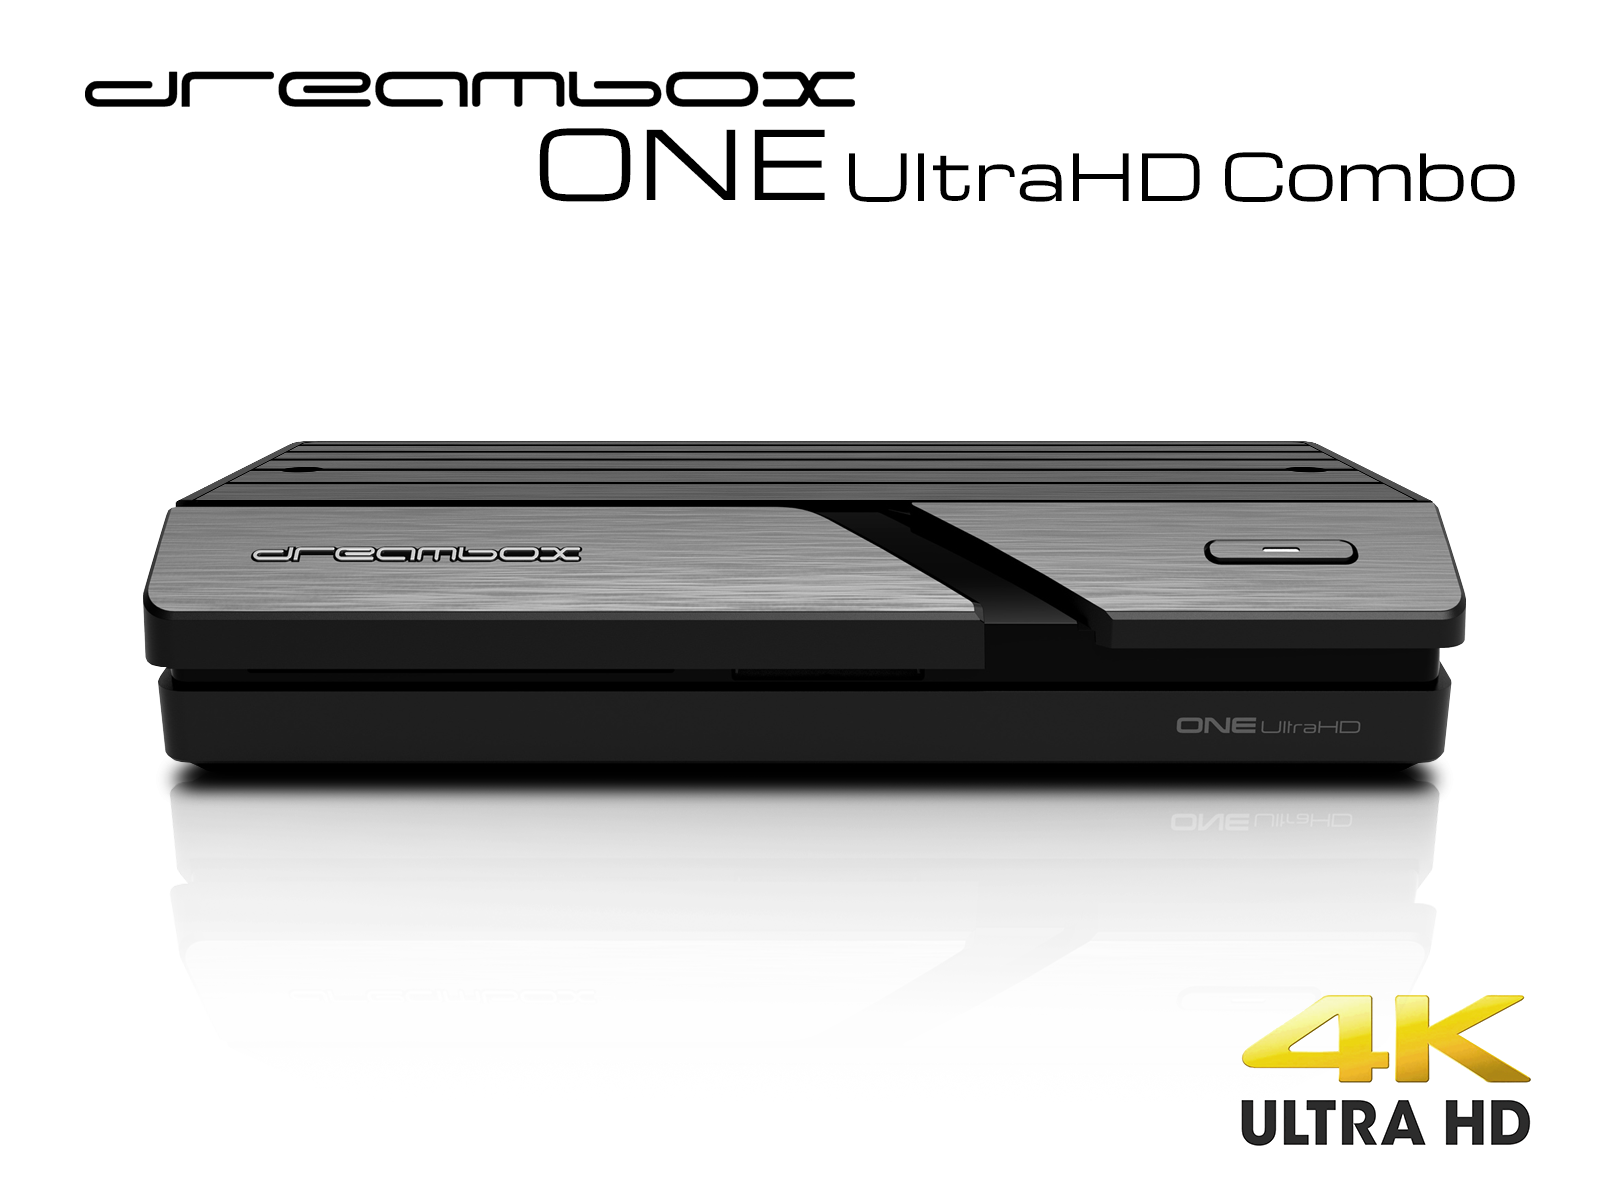 Dreambox One Combo Ultra HD 1x DVB-S2X MIS 1xDVB-C/T2 Tuner 4K 2160p E2 Linux Dual Wifi H.265 HEVC